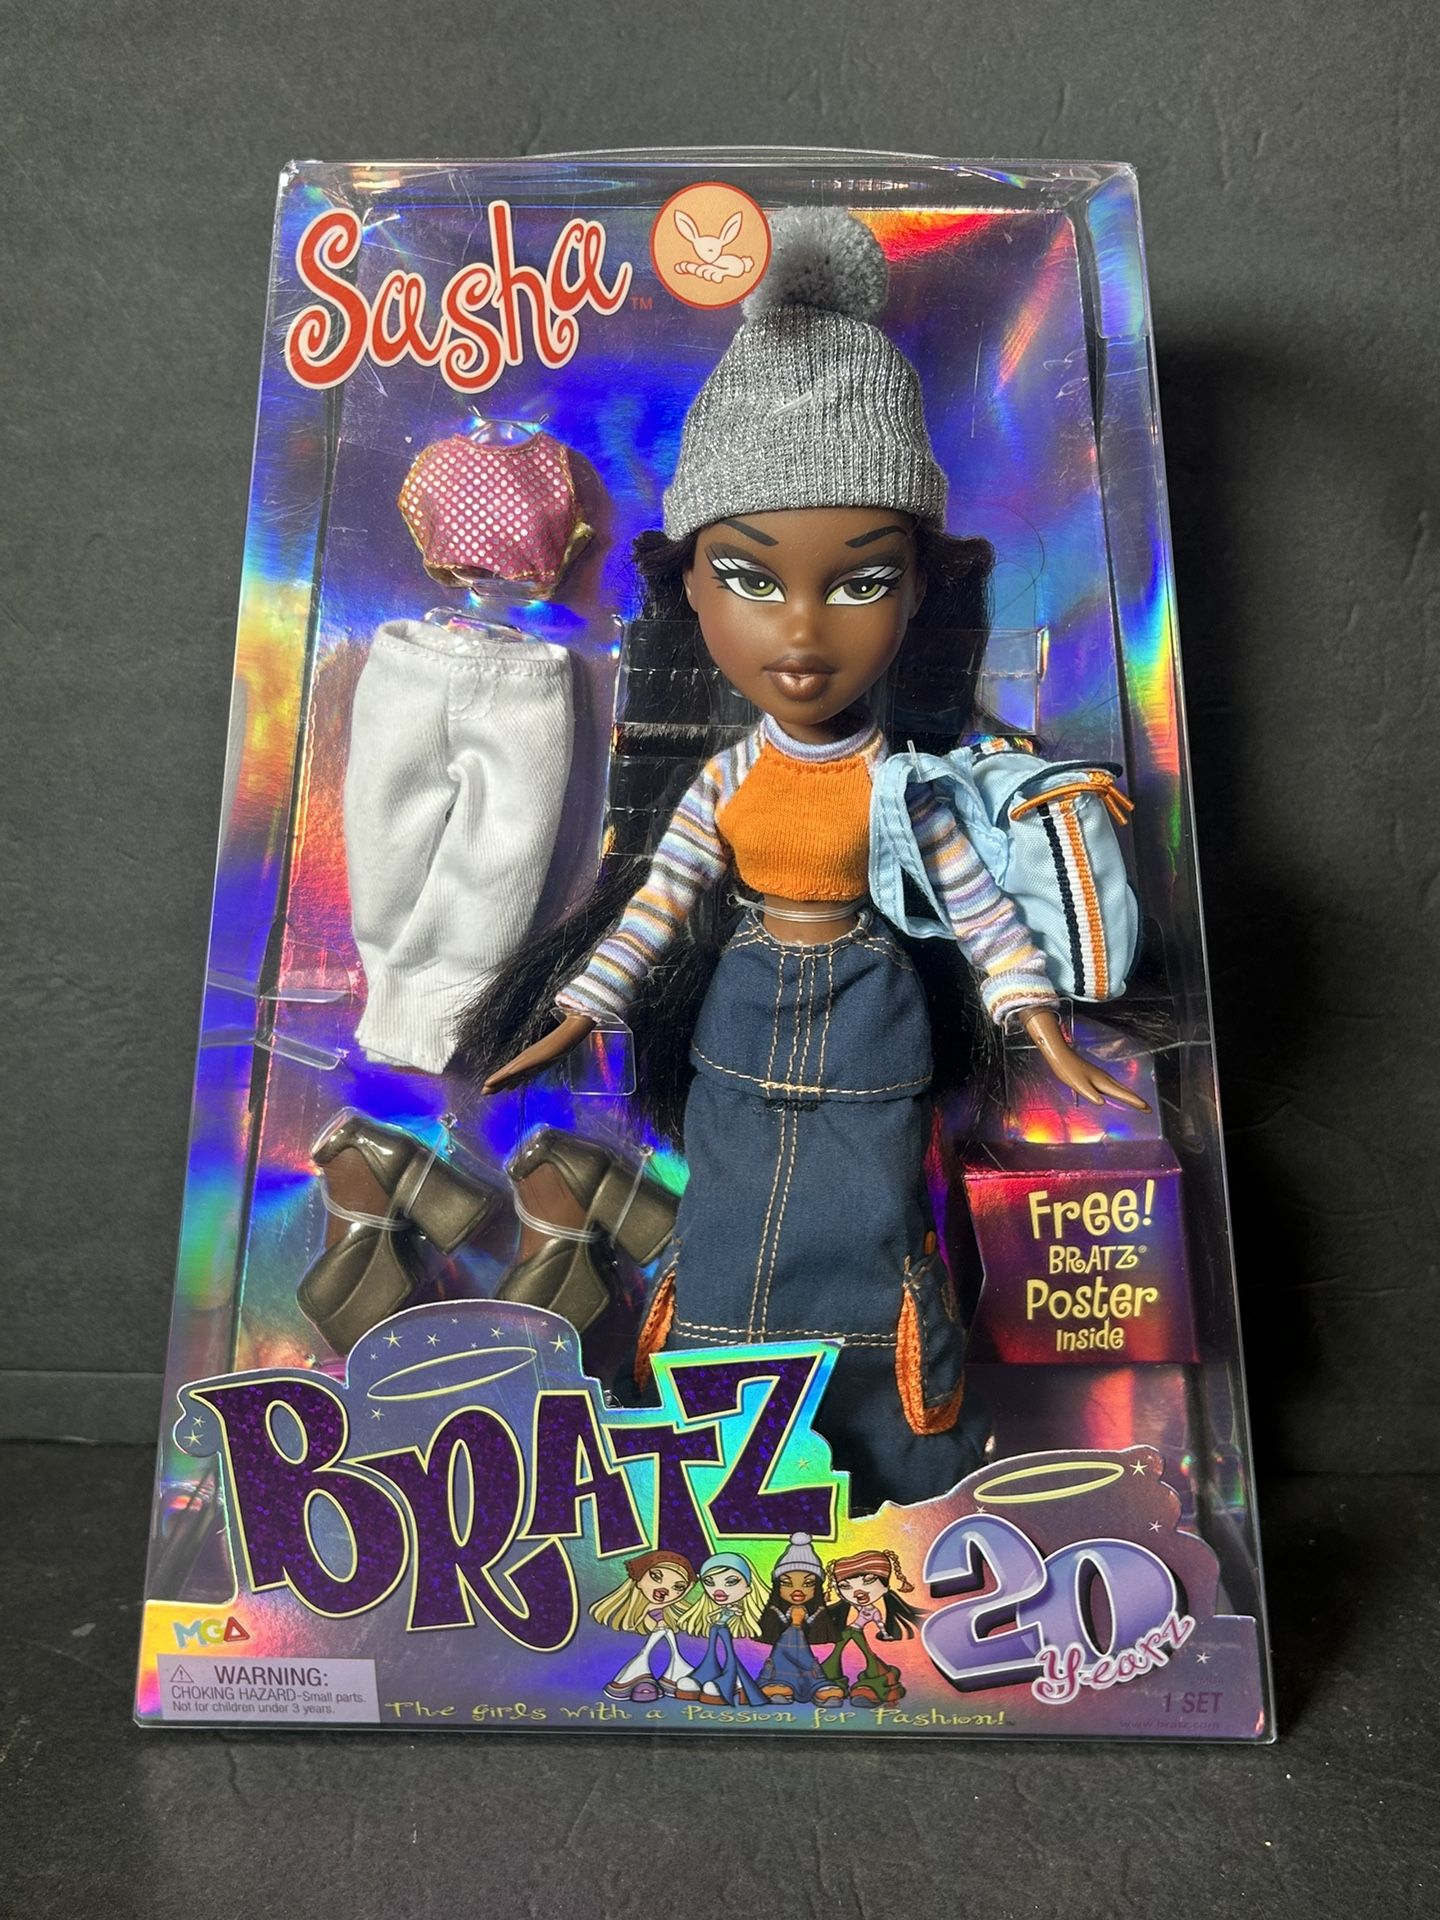 New 2021 Bratz 20th Anniversary Sasha Doll - Free Poster Inside!